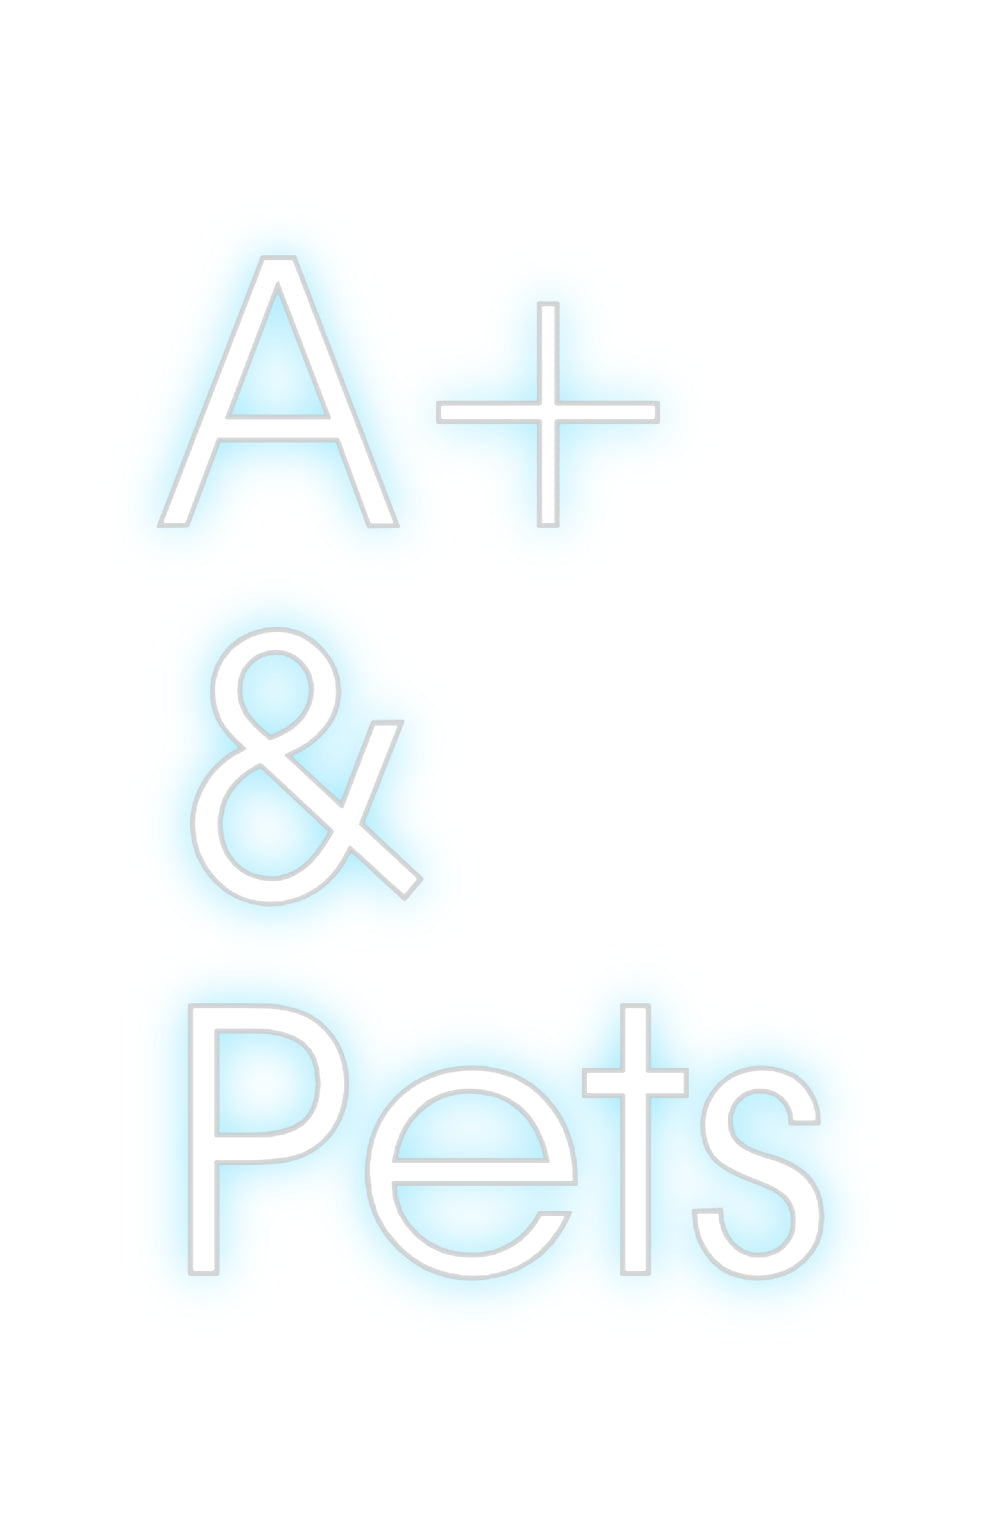 Custom Neon:  A+
  &
Pets